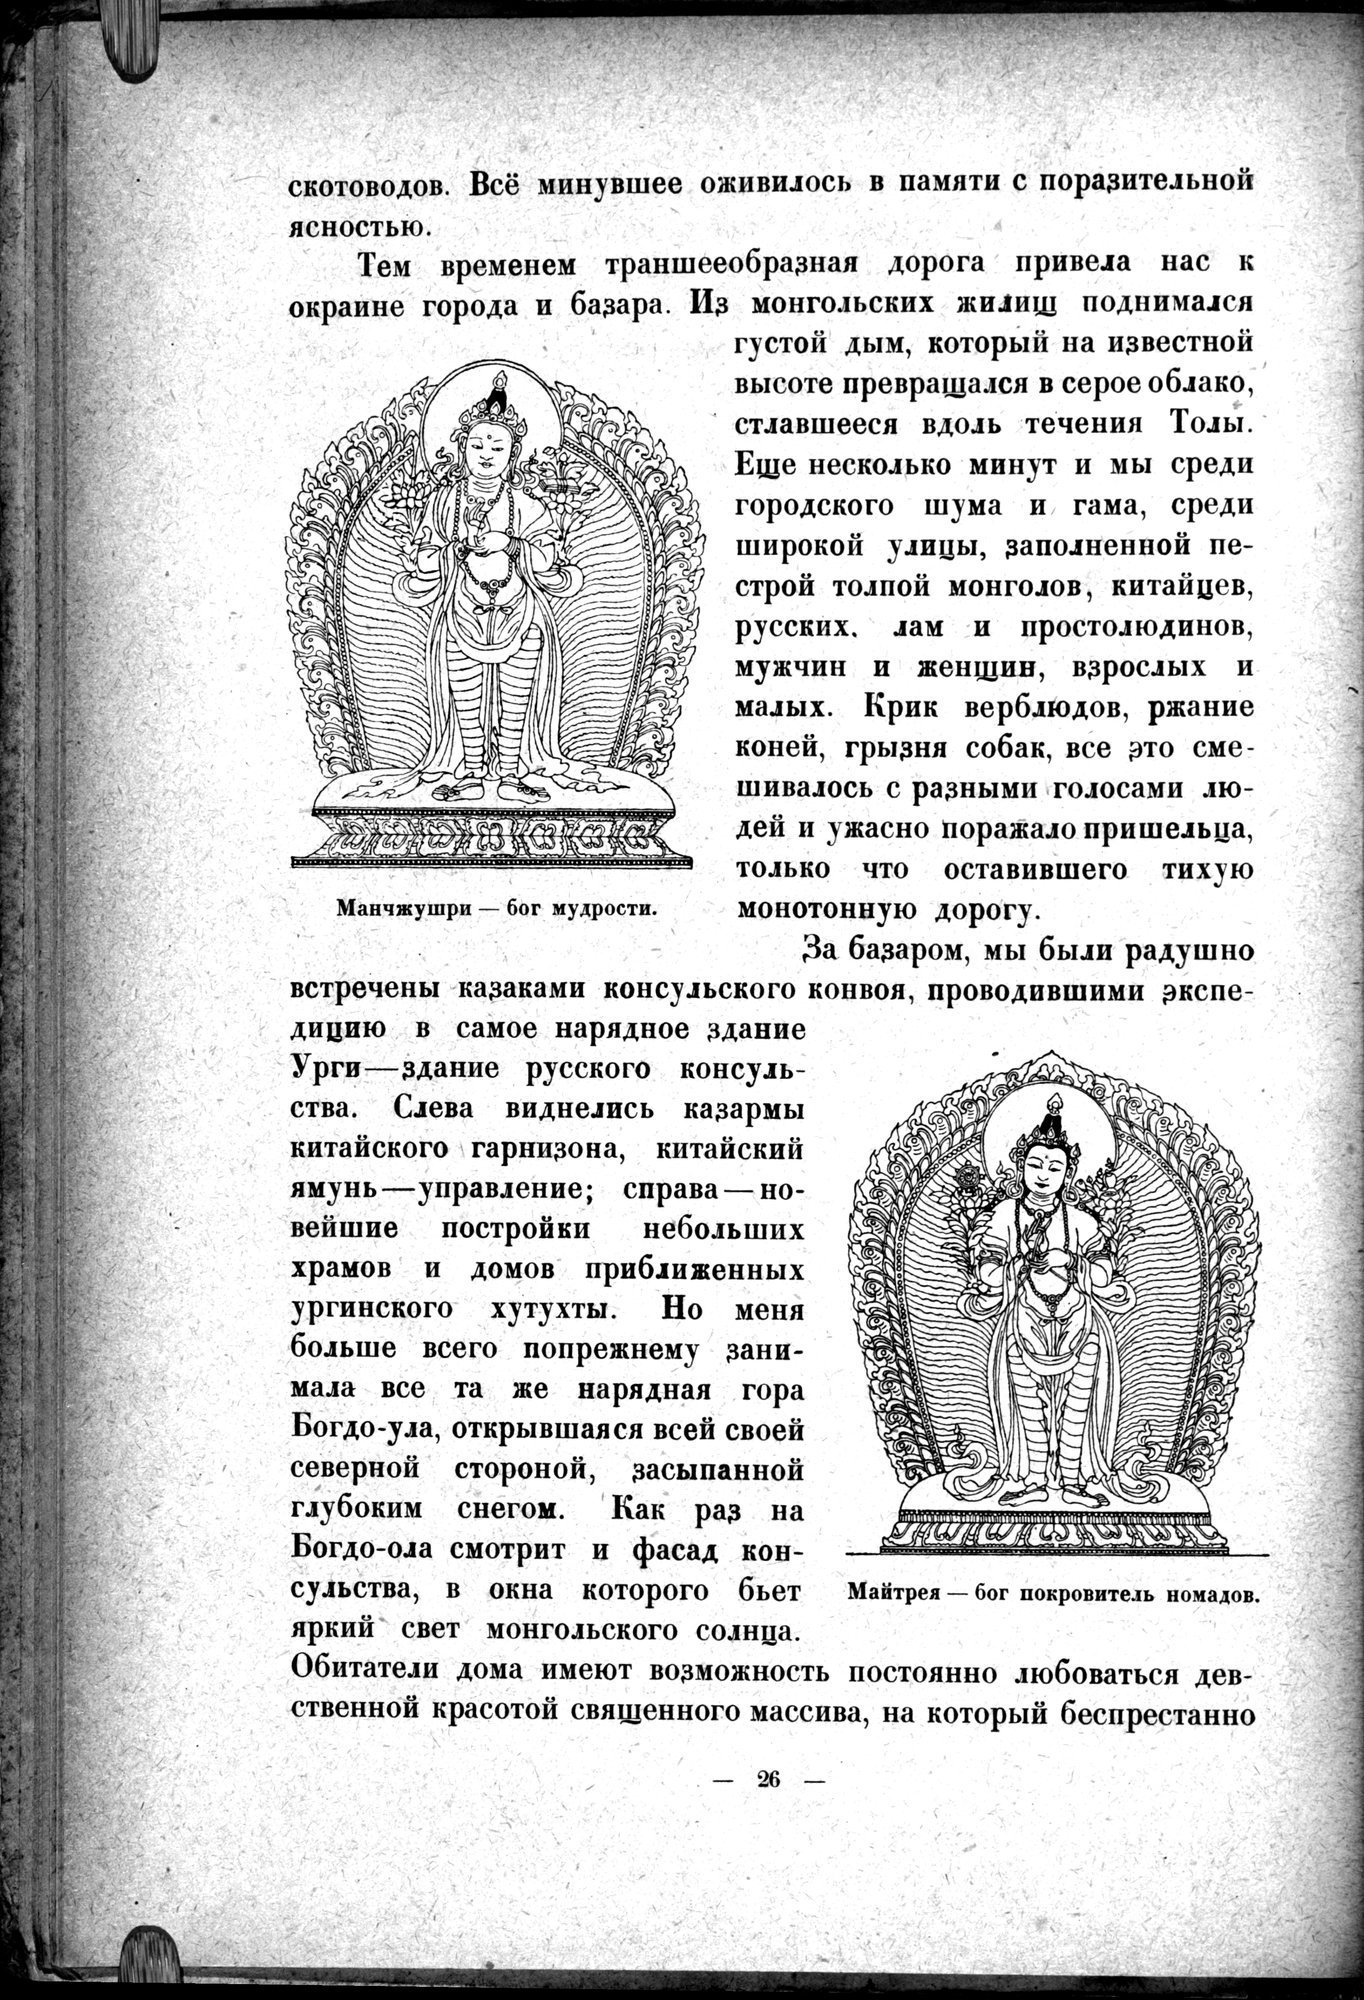 Mongoliya i Amdo i mertby gorod Khara-Khoto : vol.1 / Page 42 (Grayscale High Resolution Image)